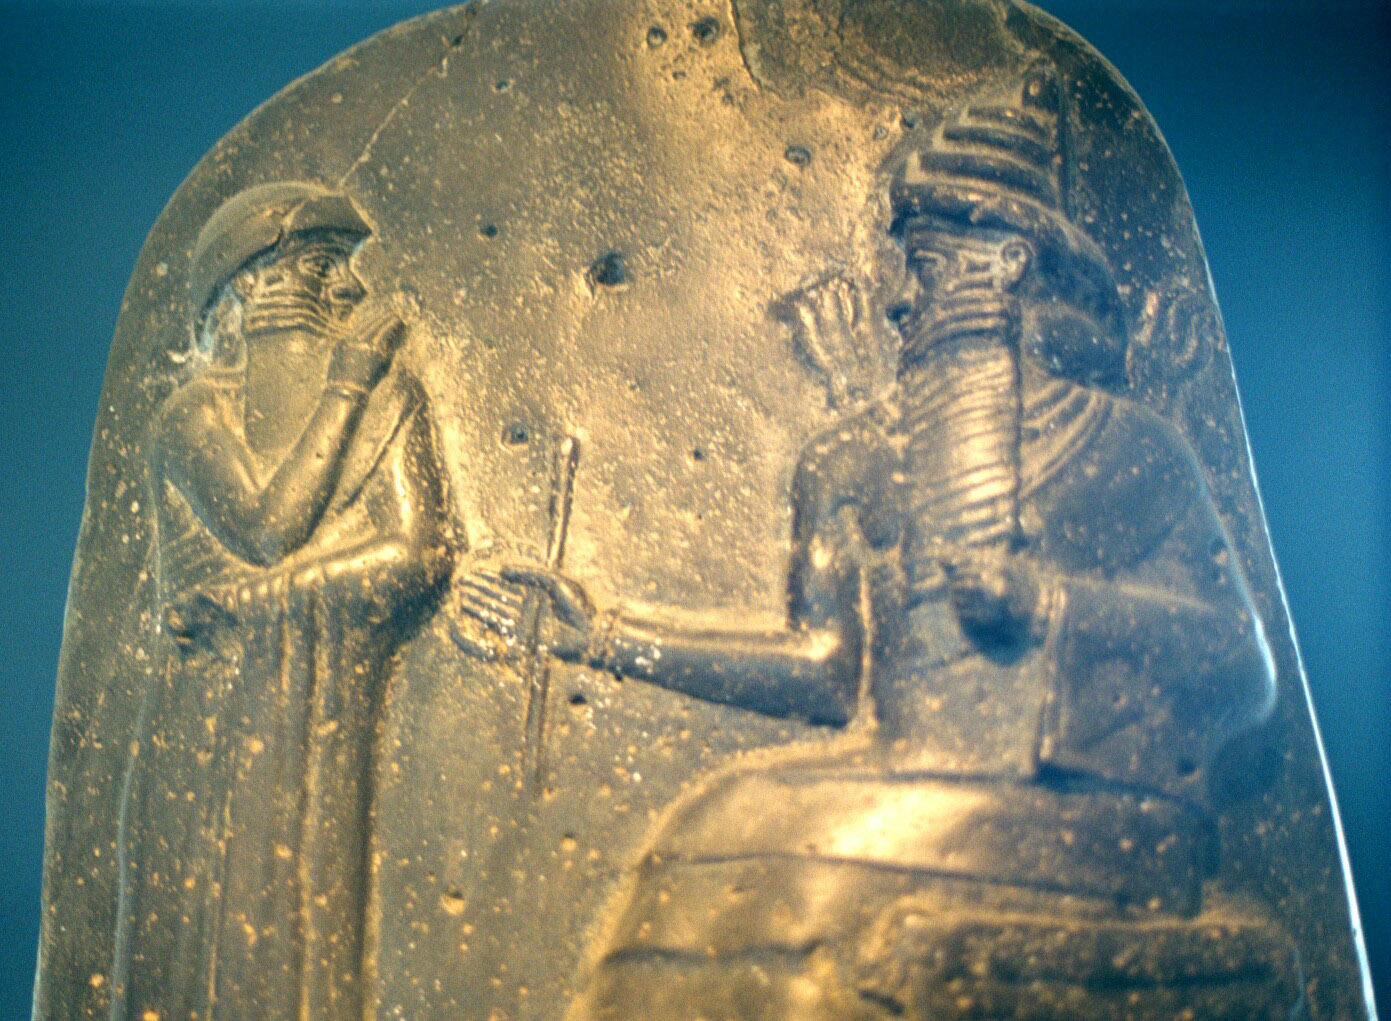 2o - Hammurabi receives the Great Laws